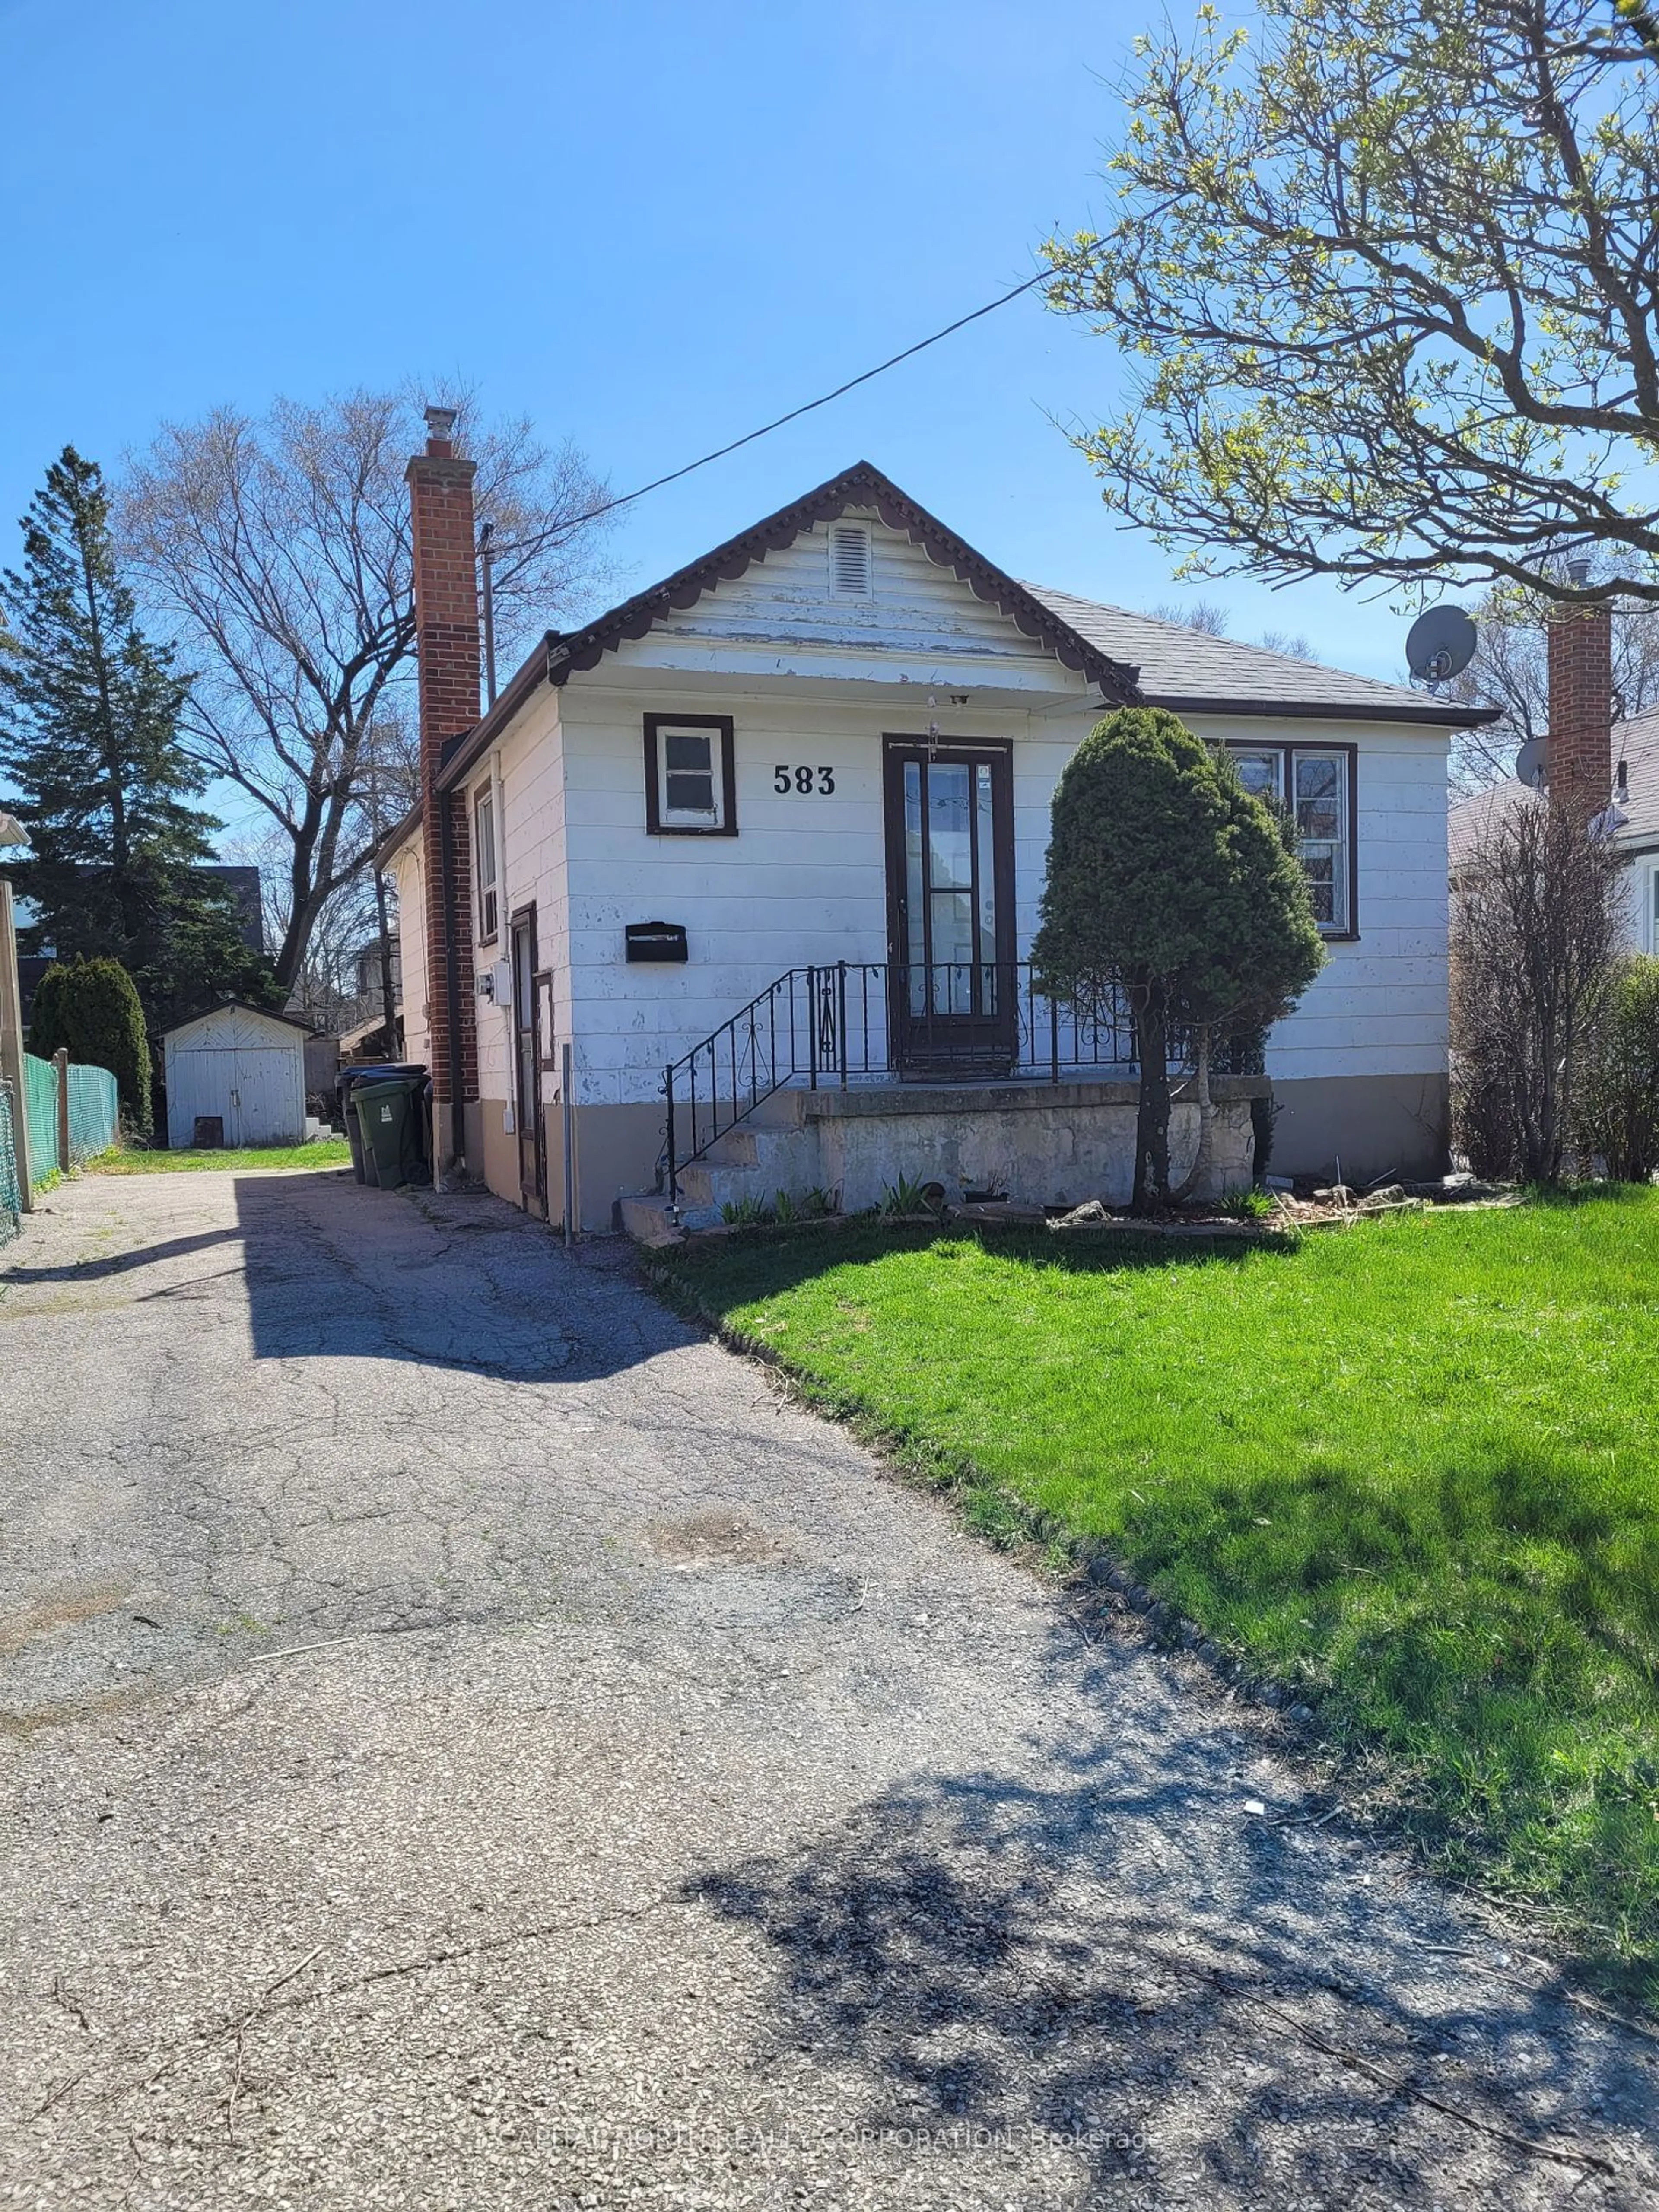 Frontside or backside of a home for 583 Glen Park Ave, Toronto Ontario M6B 2G4